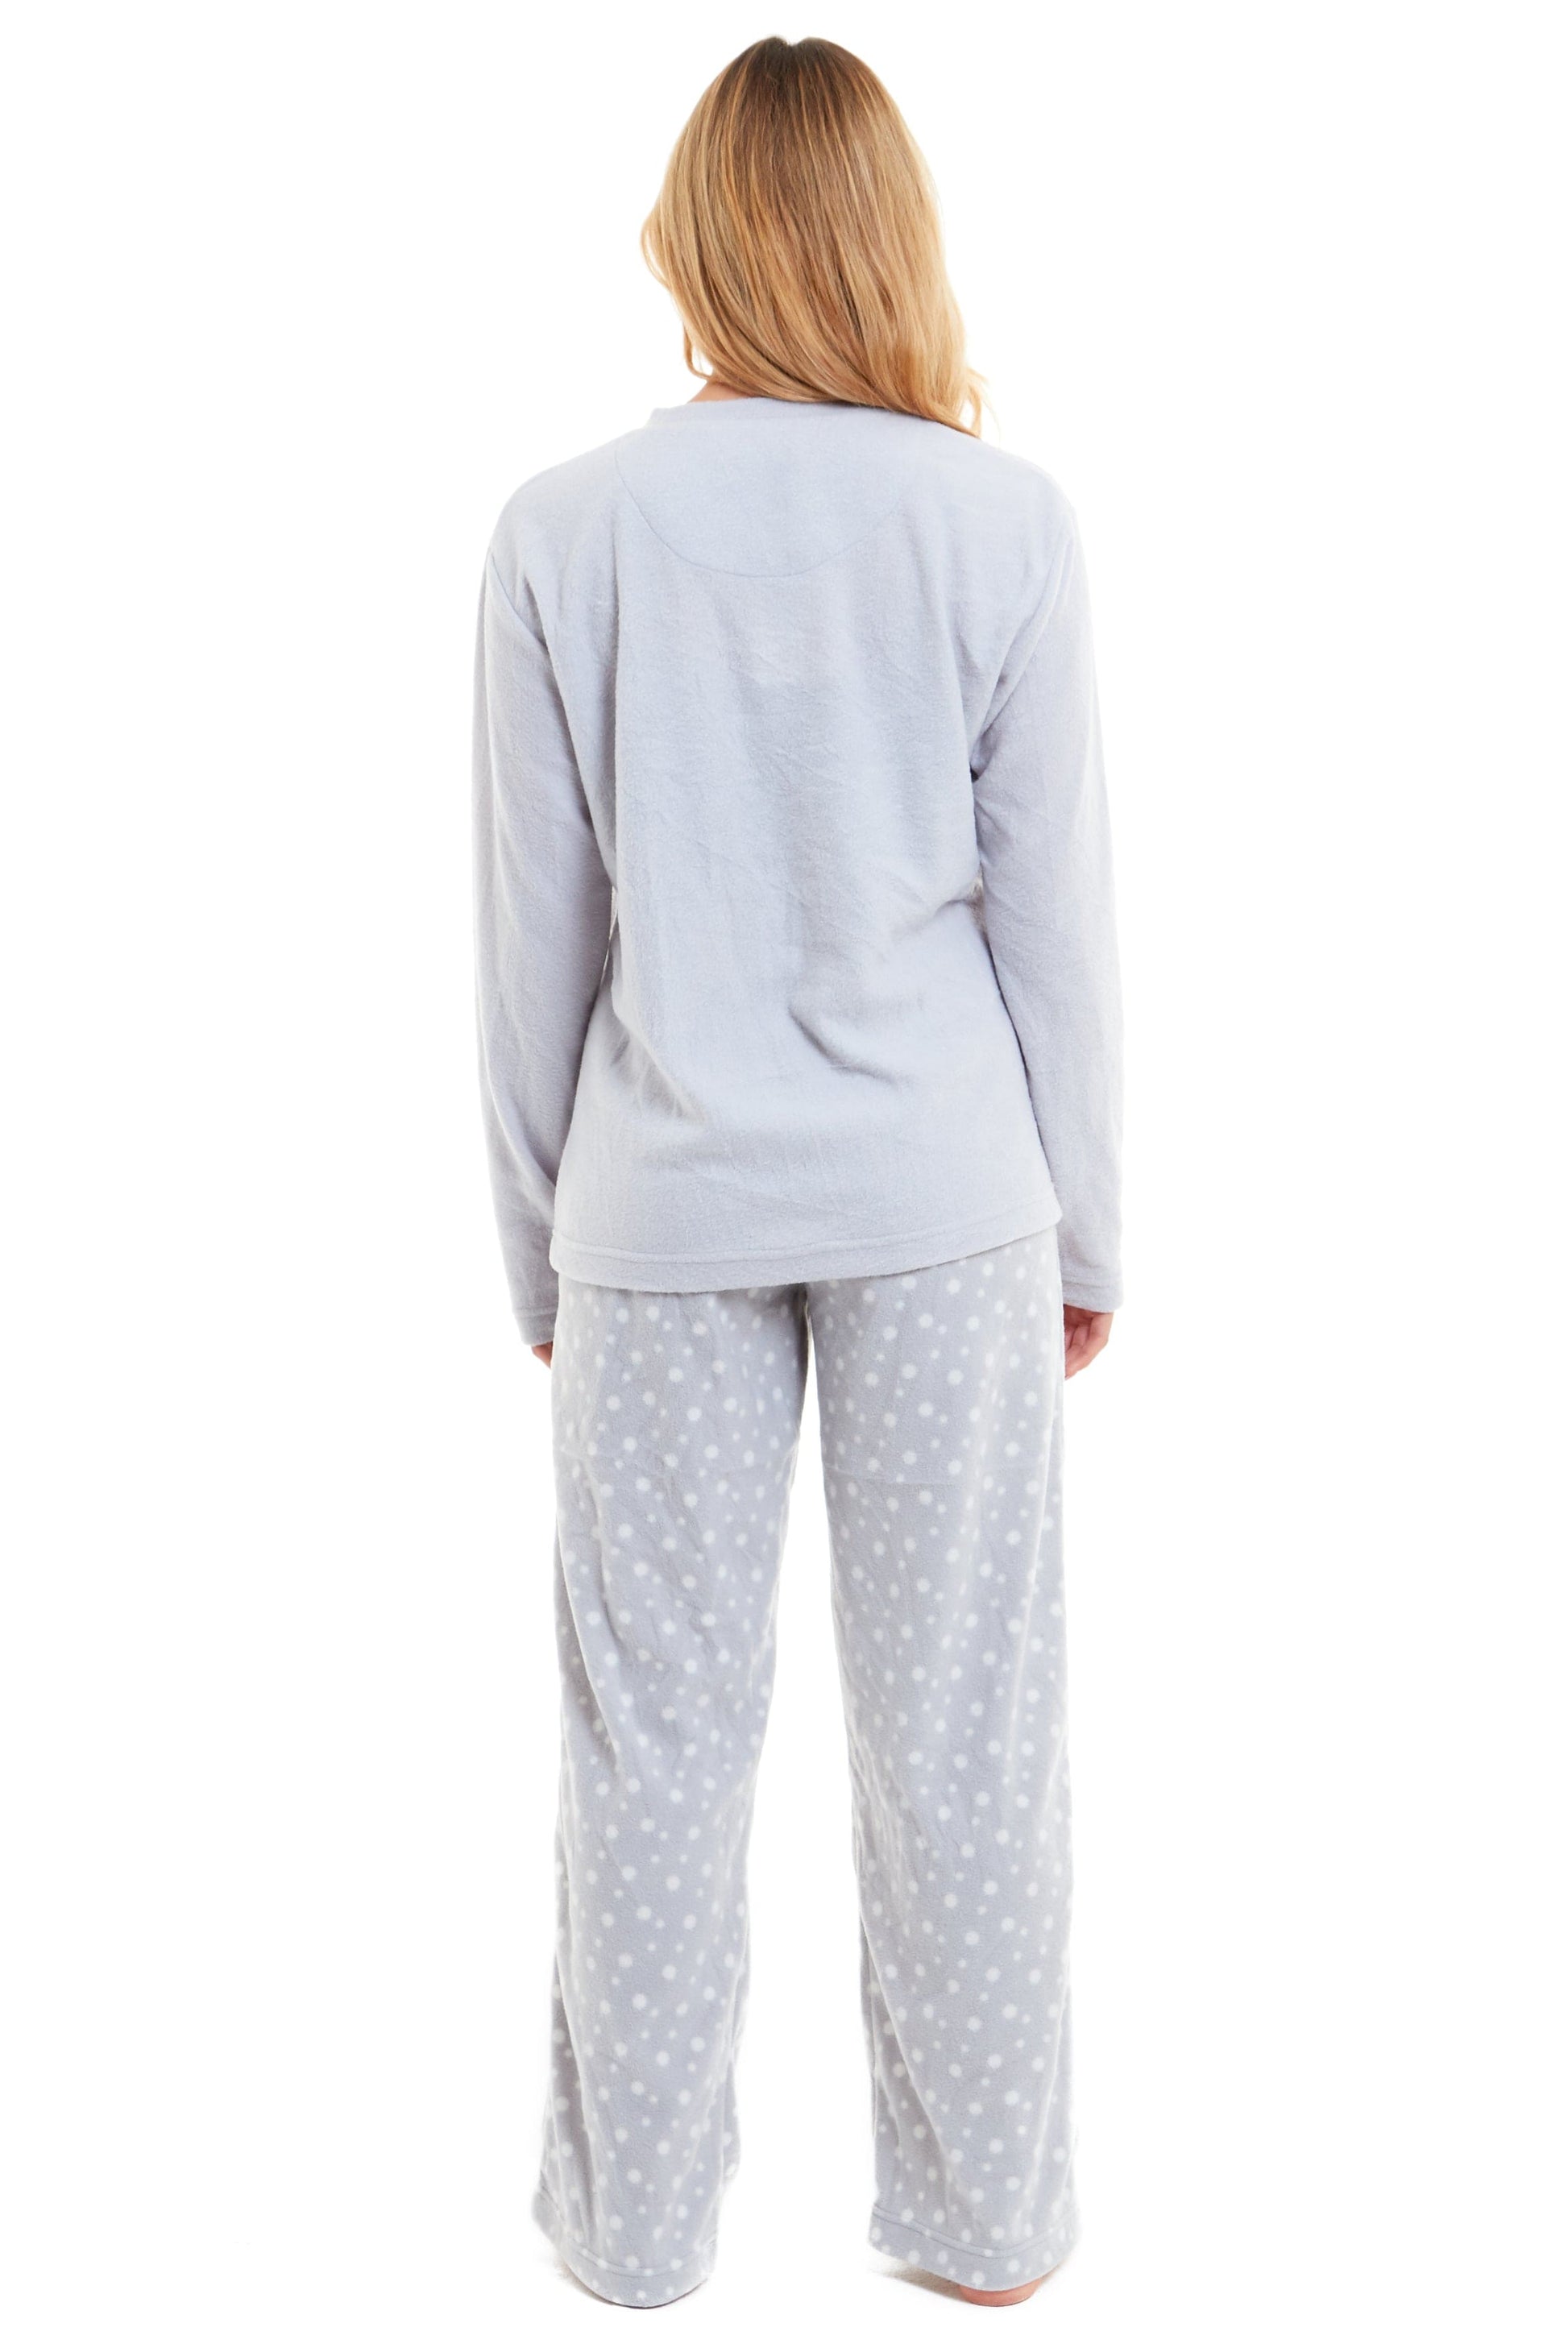 Penguin Polar Fleece Pyjama Set, Christmas Gift Daisy Dreamer Pyjamas